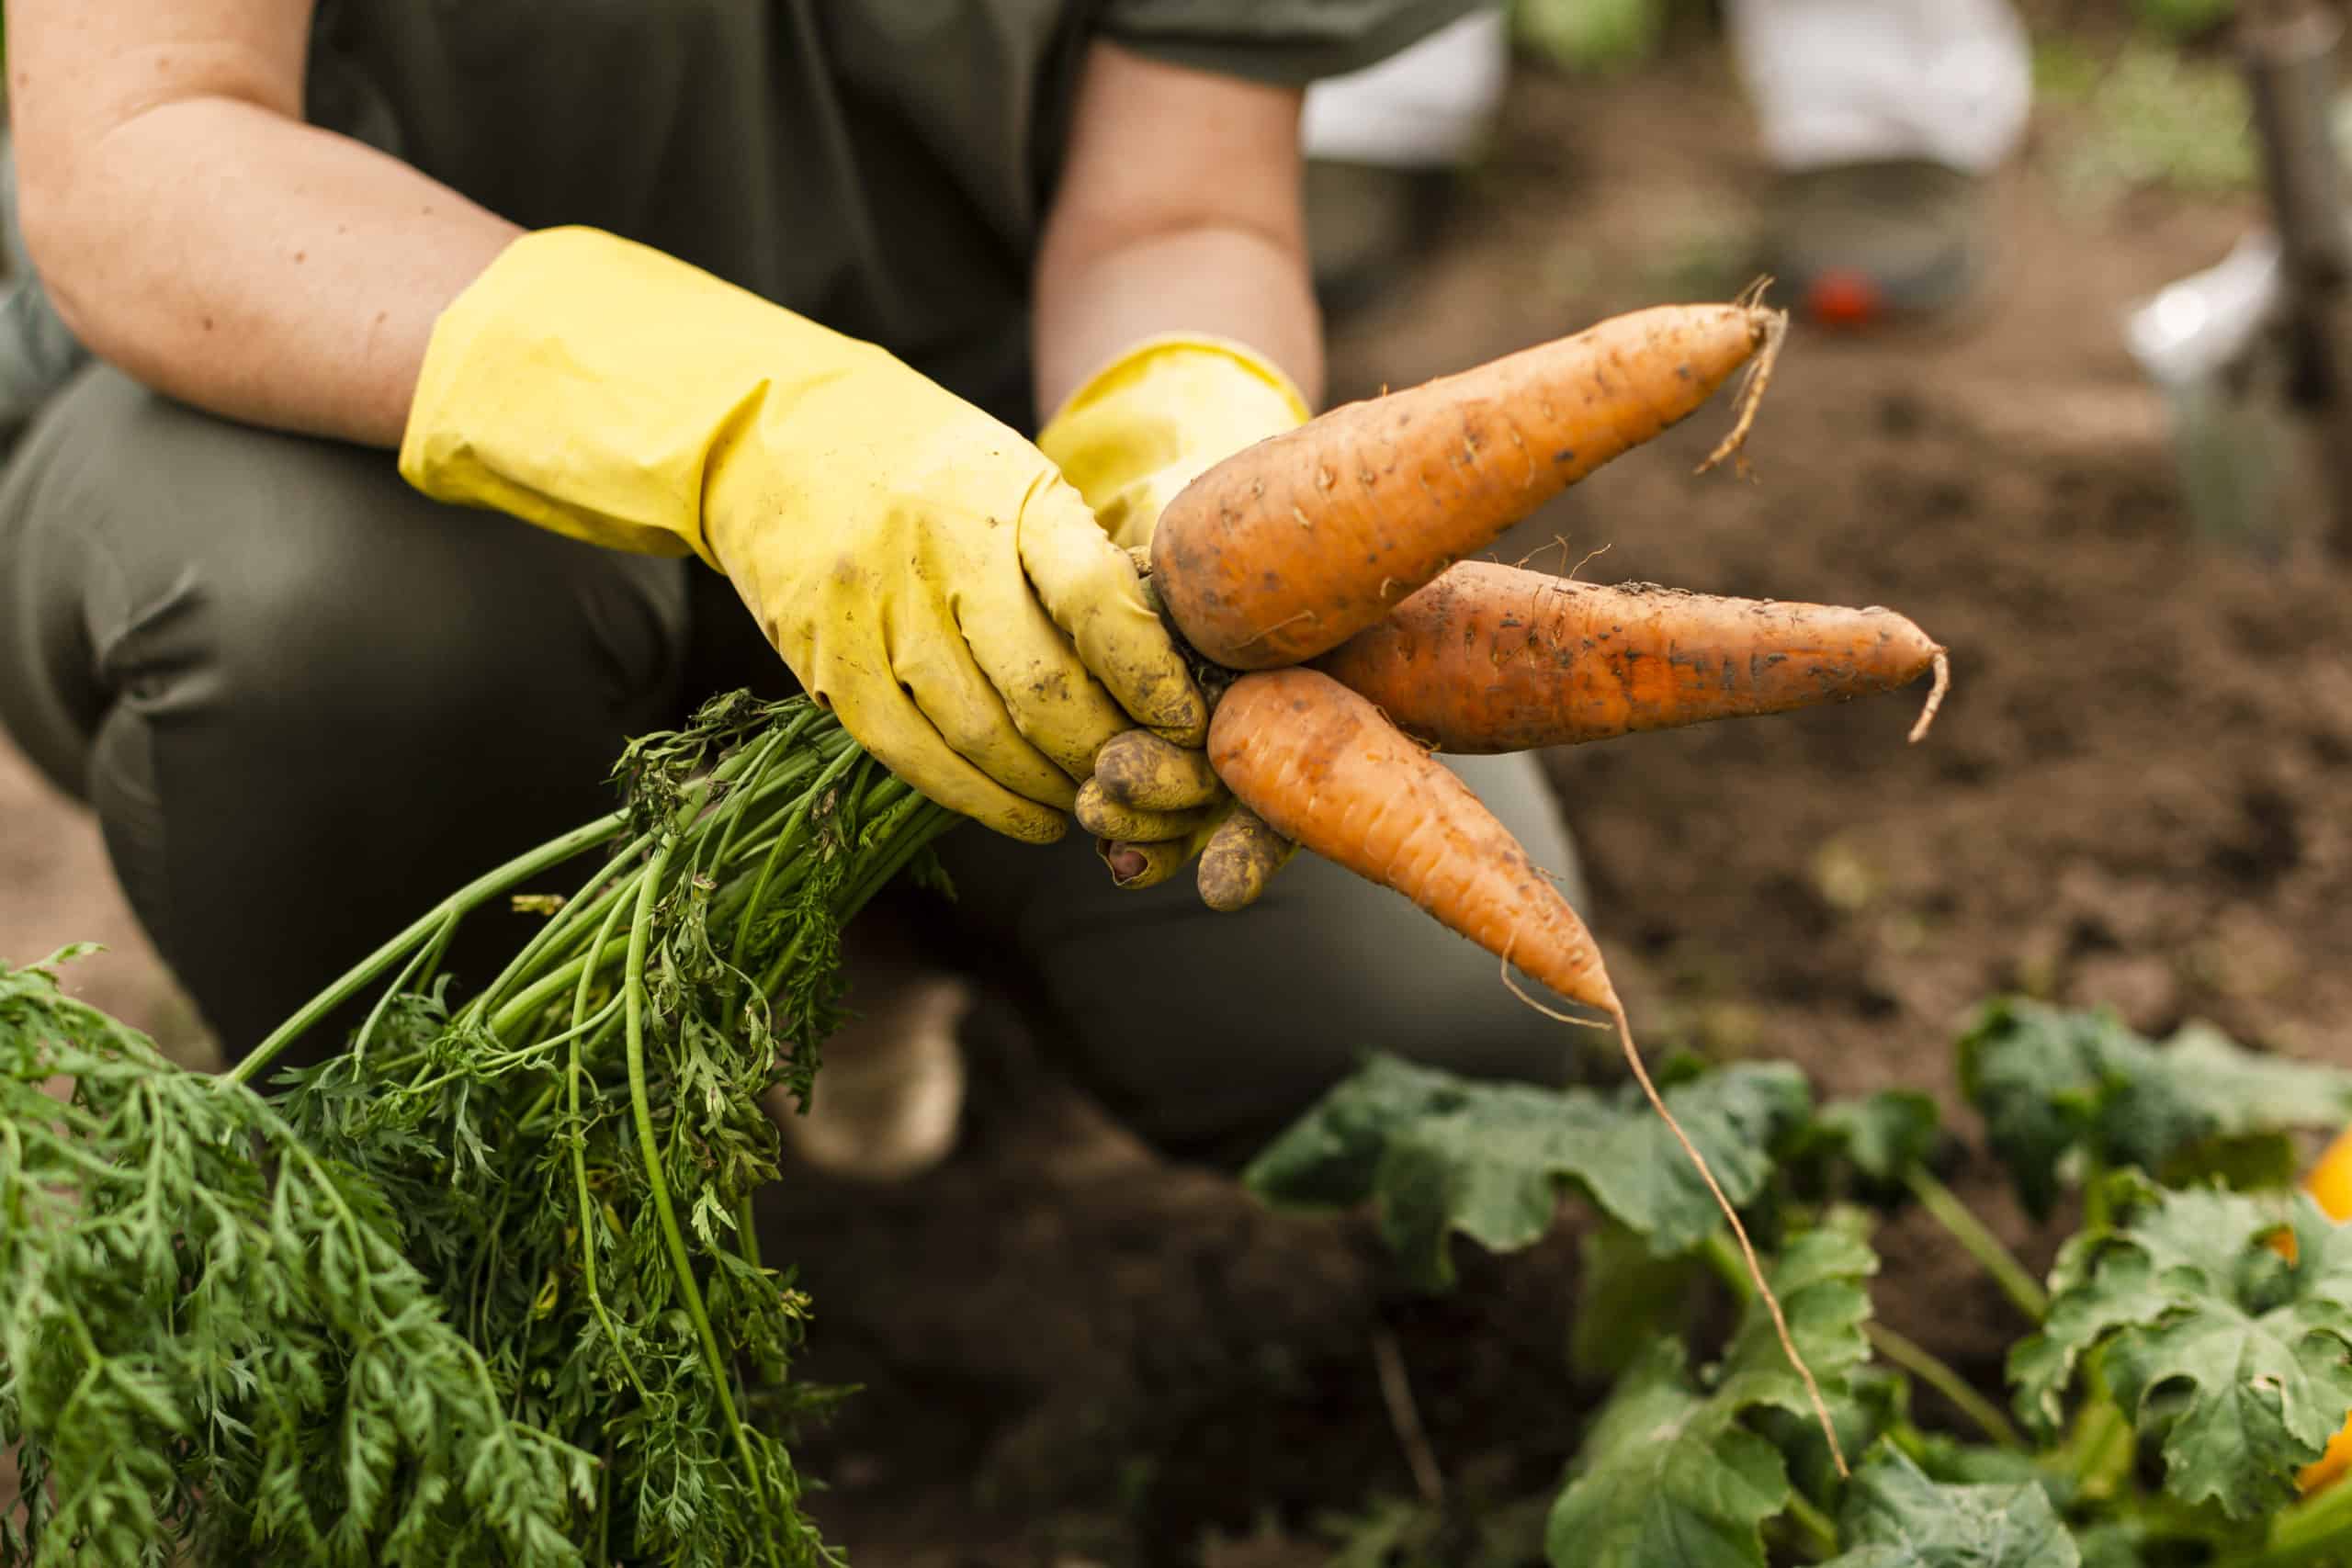 Woman harvesting carrots